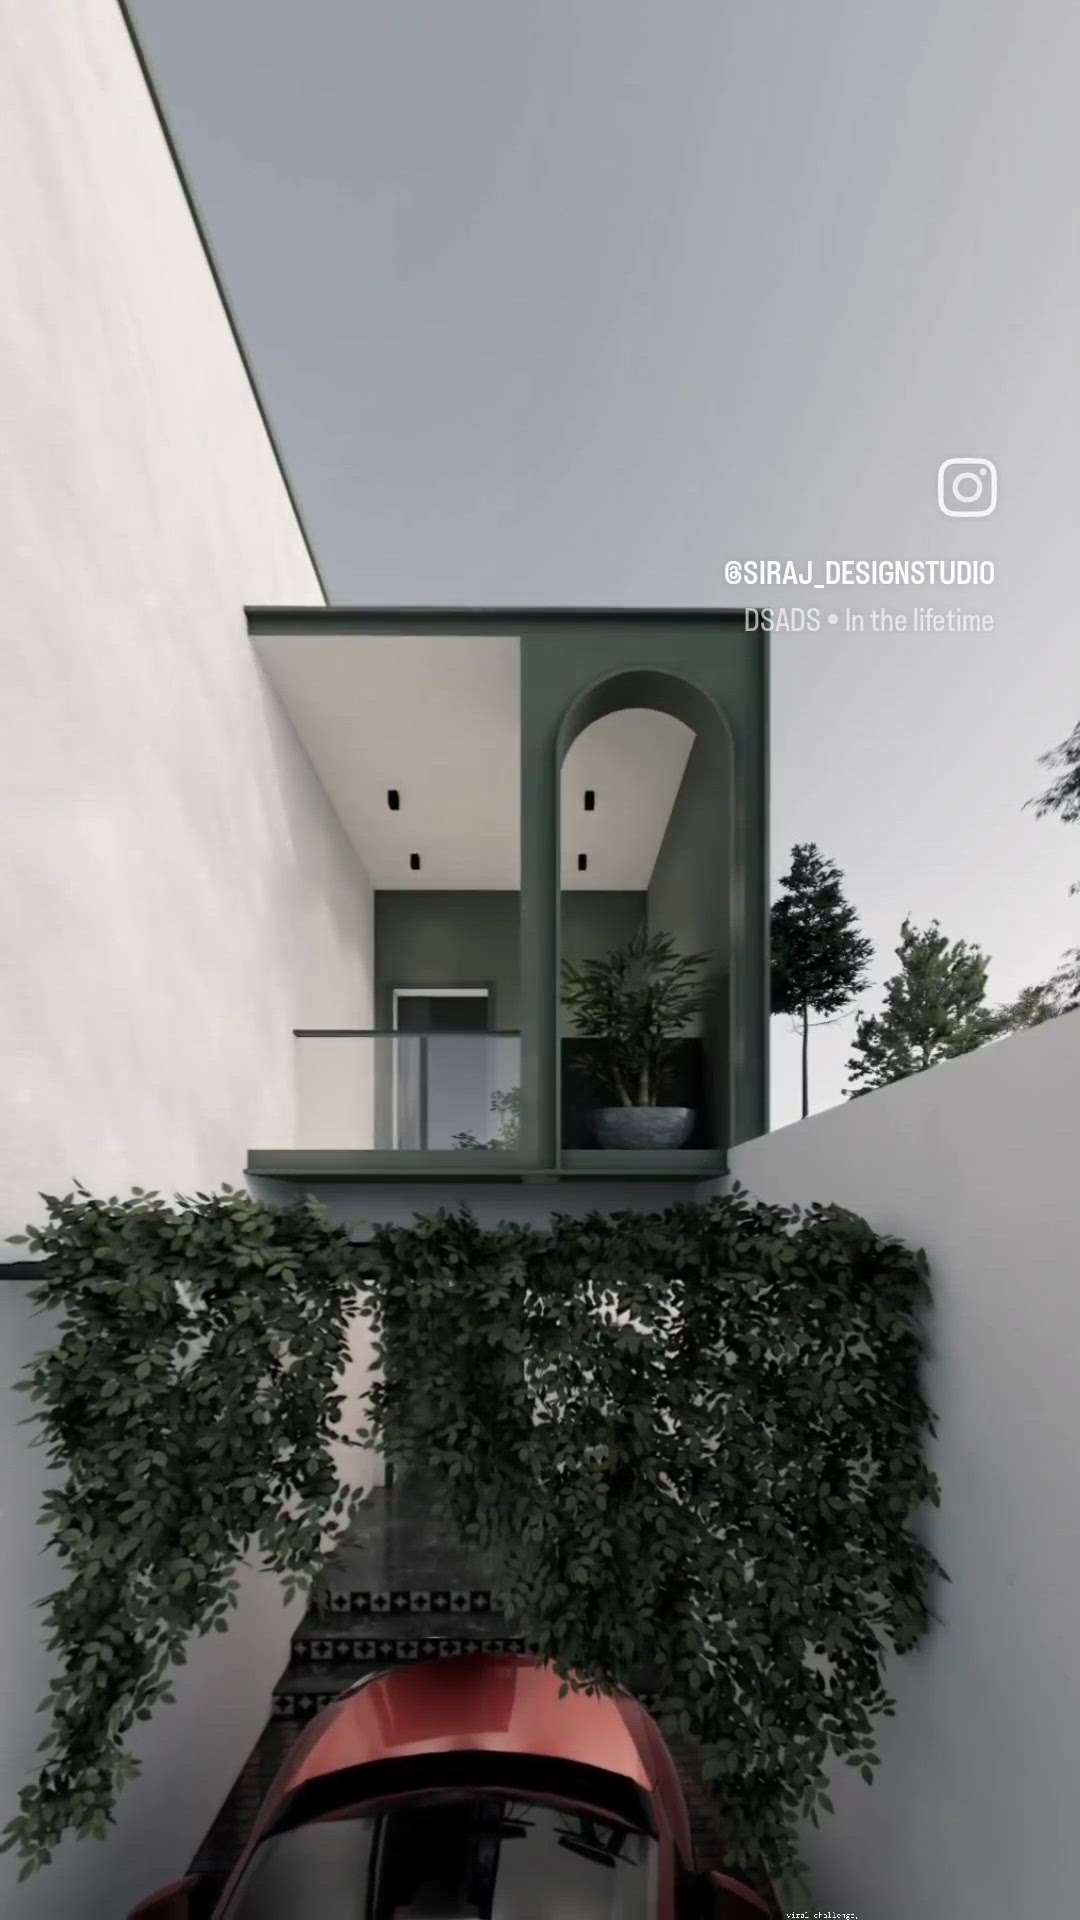 New exterior home elevation design✨

 #3d #sirajdesignstudio #exteriors #Architect #koloapp #koloviral #video #viralvideo #reelsinstagram #reachmorepeople